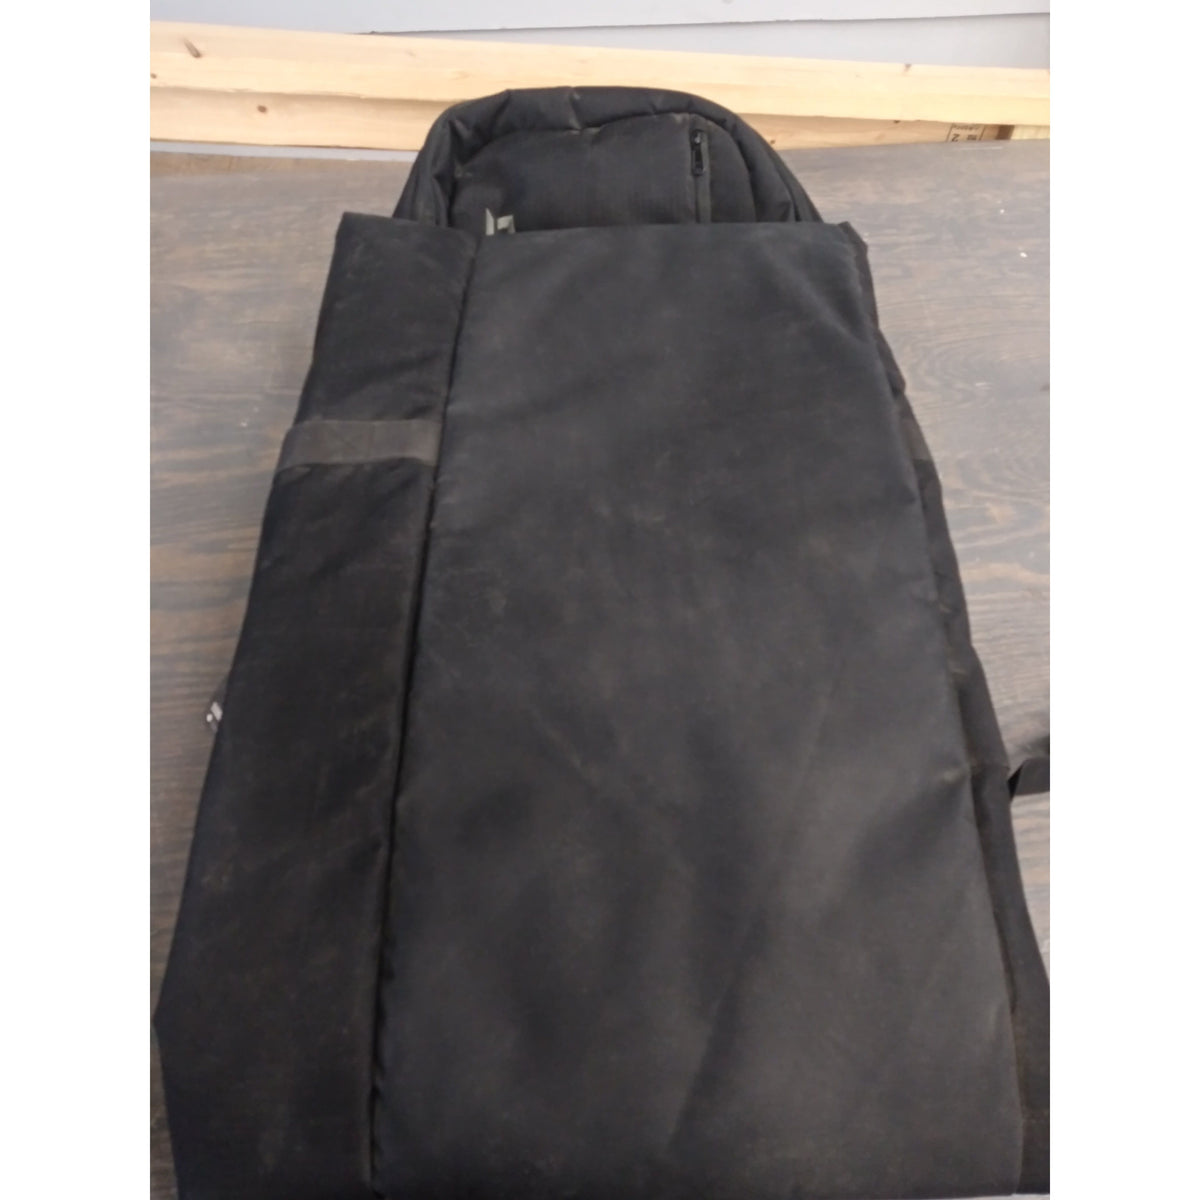 Dakine Boundary Ski Roller Bag-Black-200 cm - Used - Acceptable